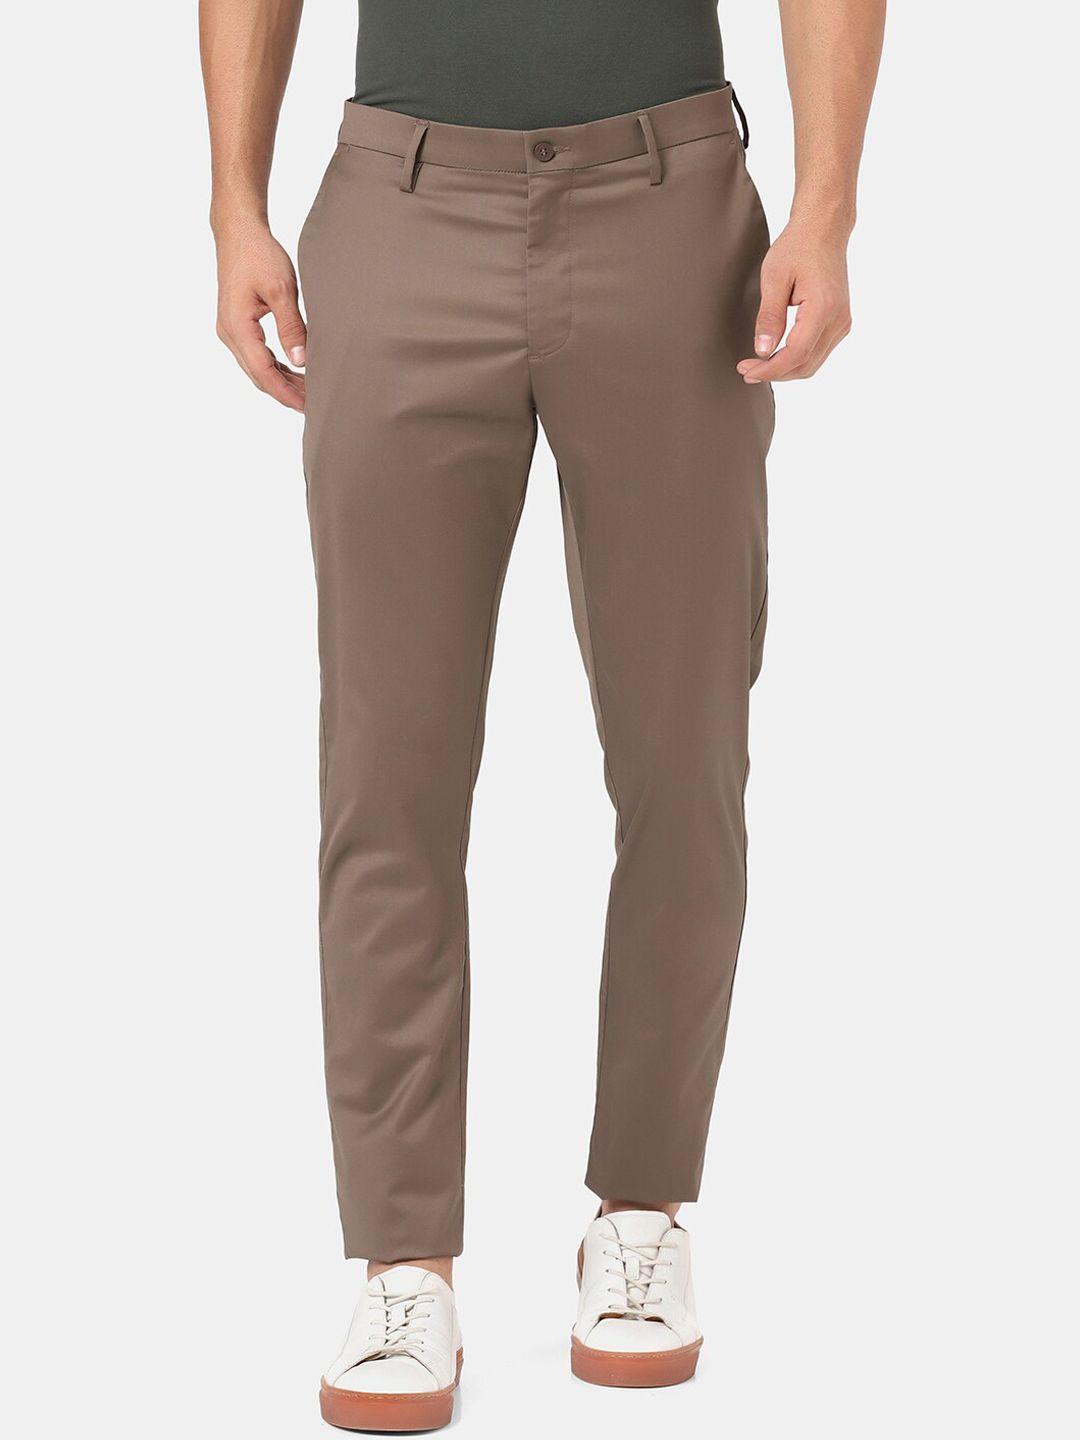 blackberrys techpro collection men brown slim fit low-rise trousers